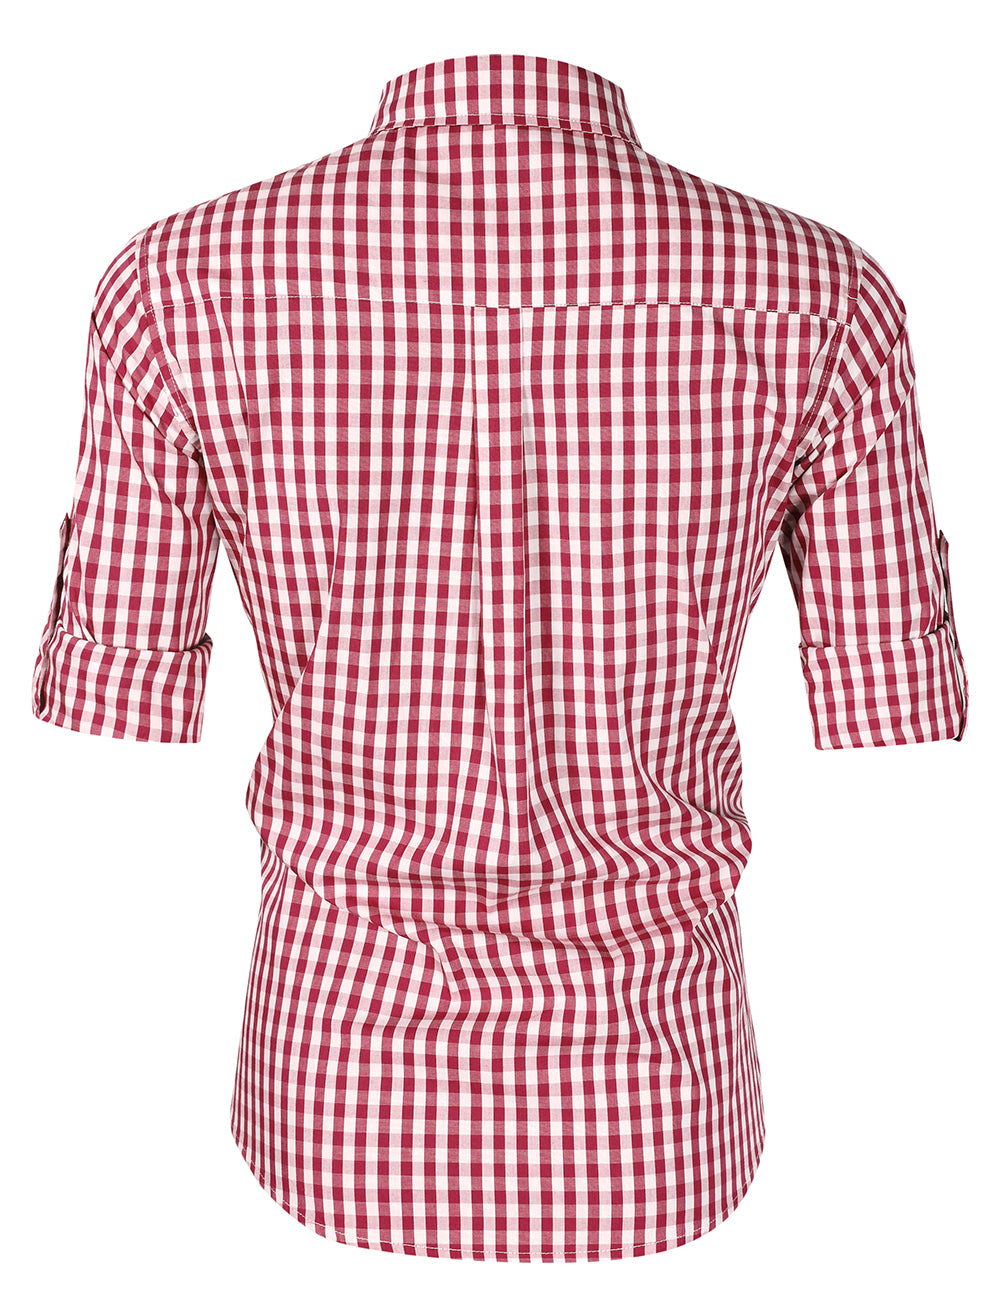 WIESNFASHION Herrenmode Oktoberfest Plaid Button Langarm Slim Fit Hemd